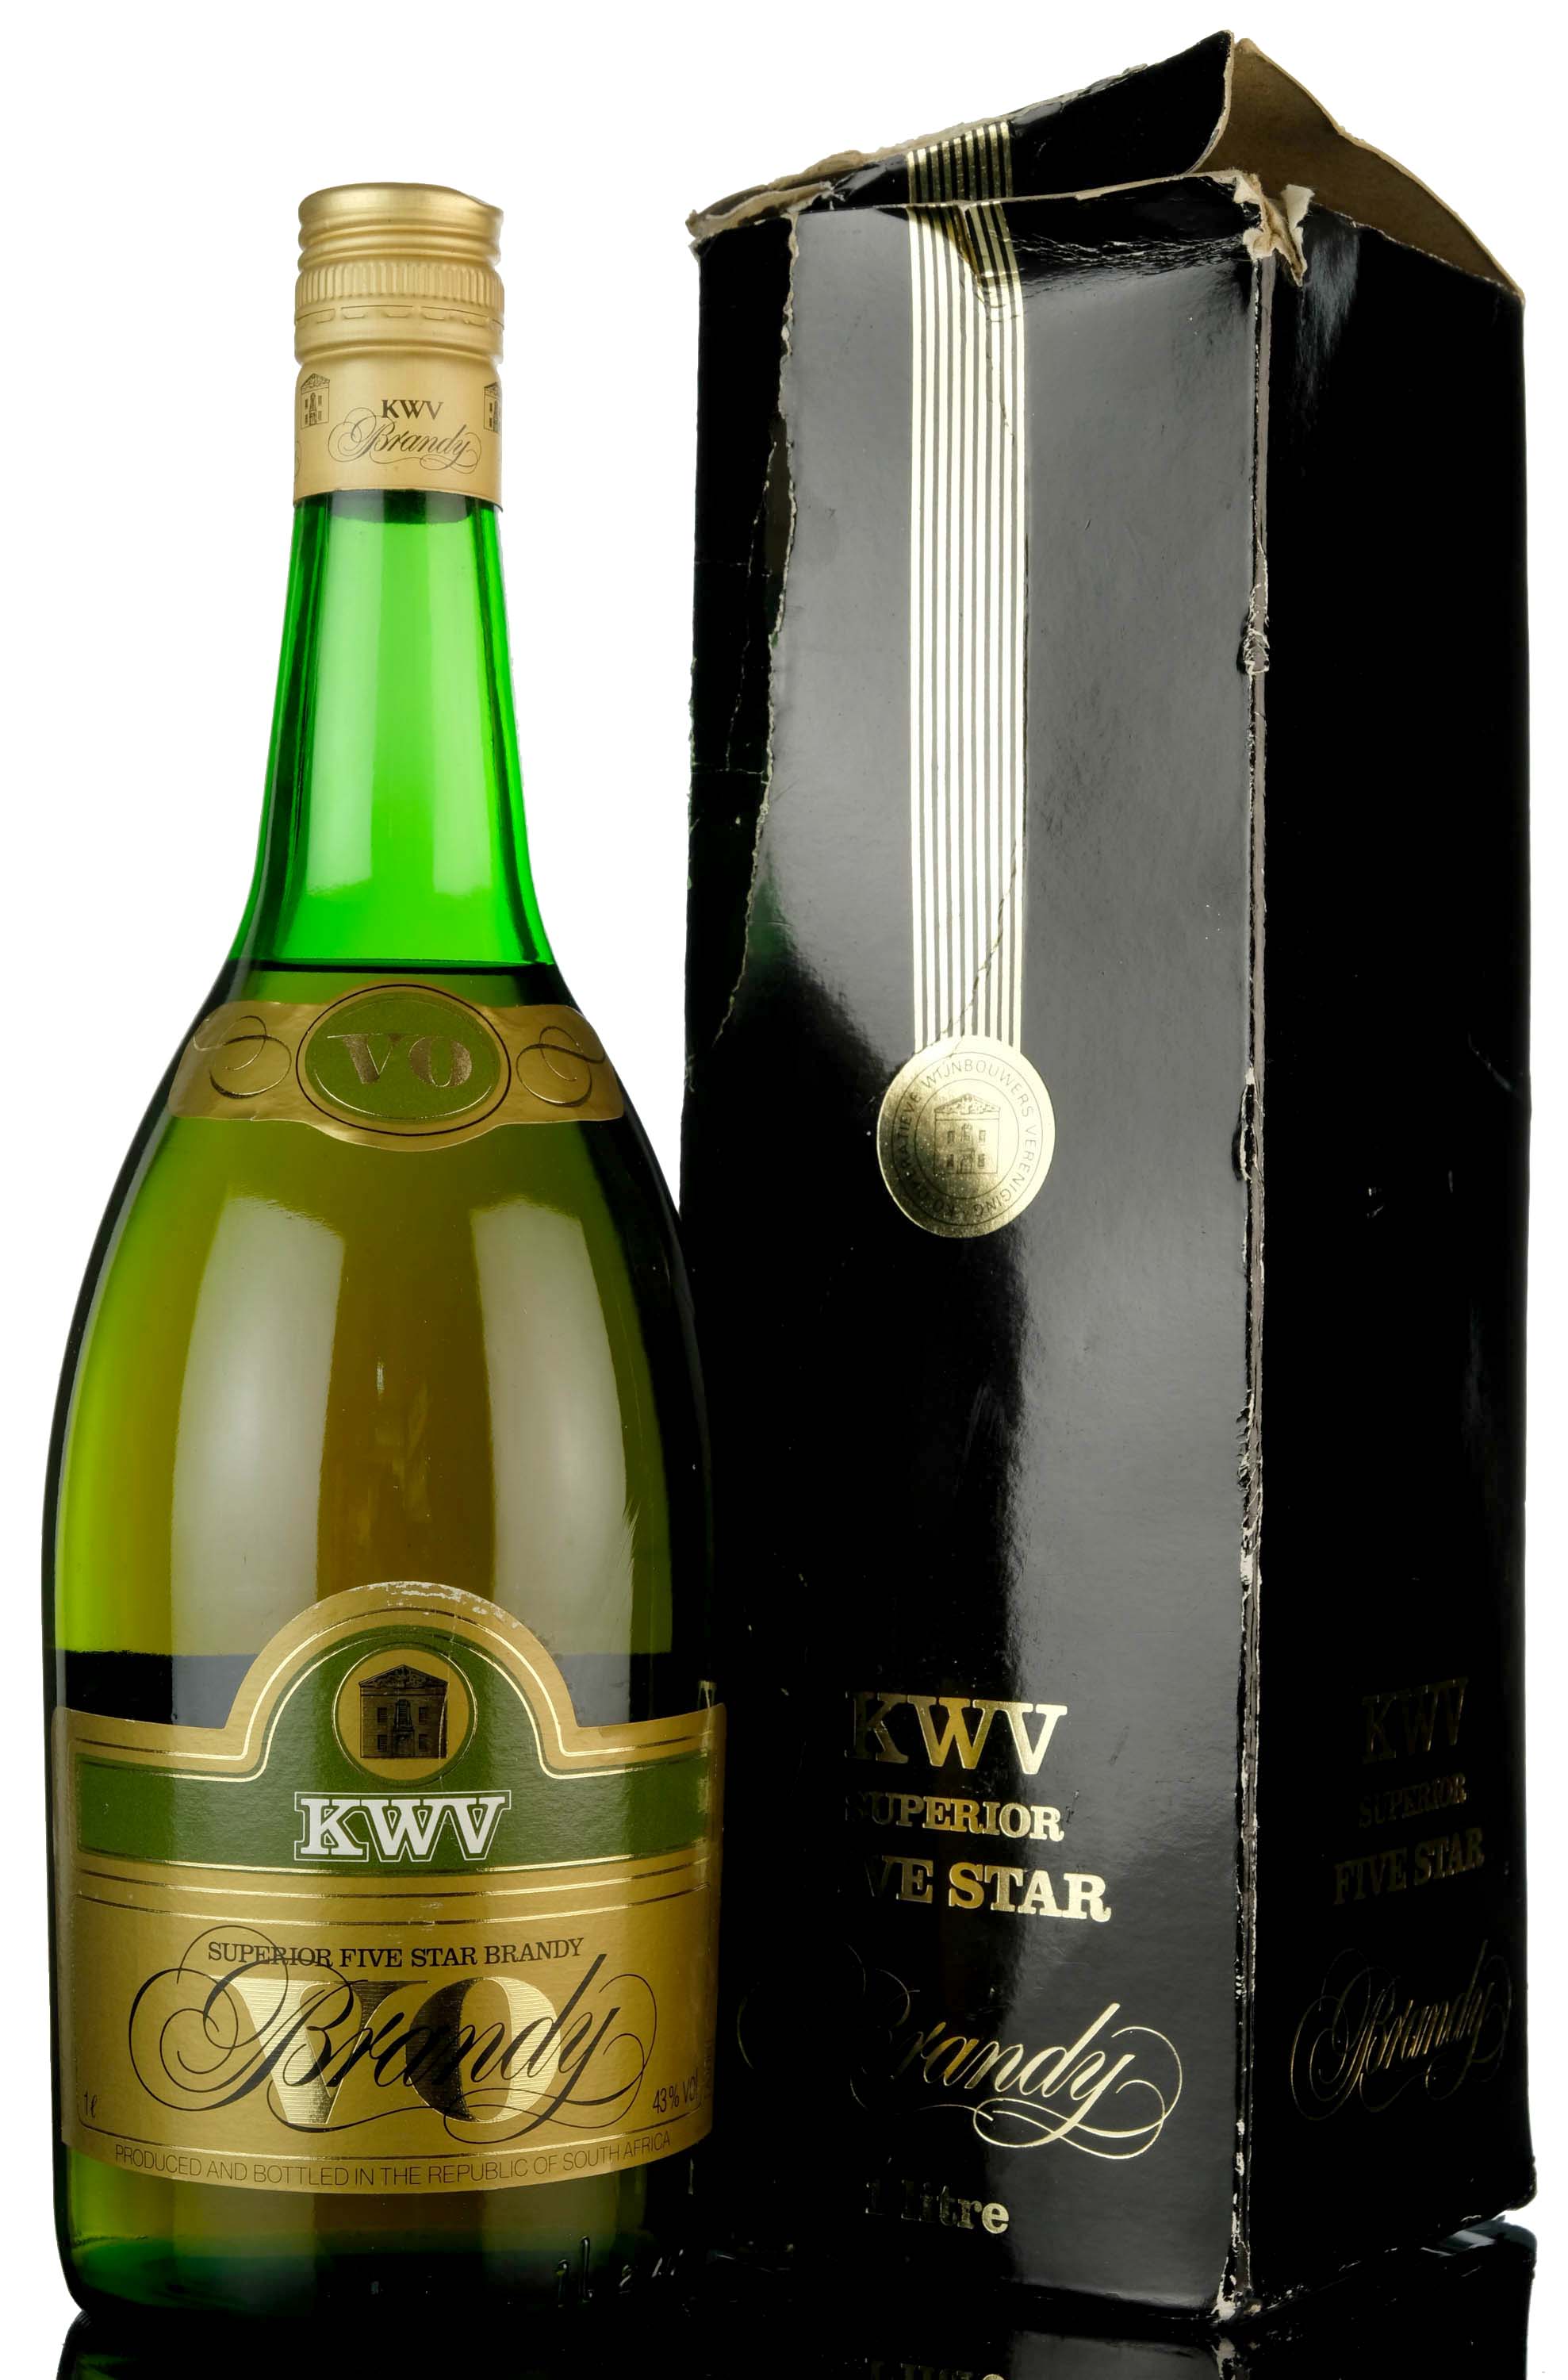 KWV Superior 5 Star Brandy - 1 Litre